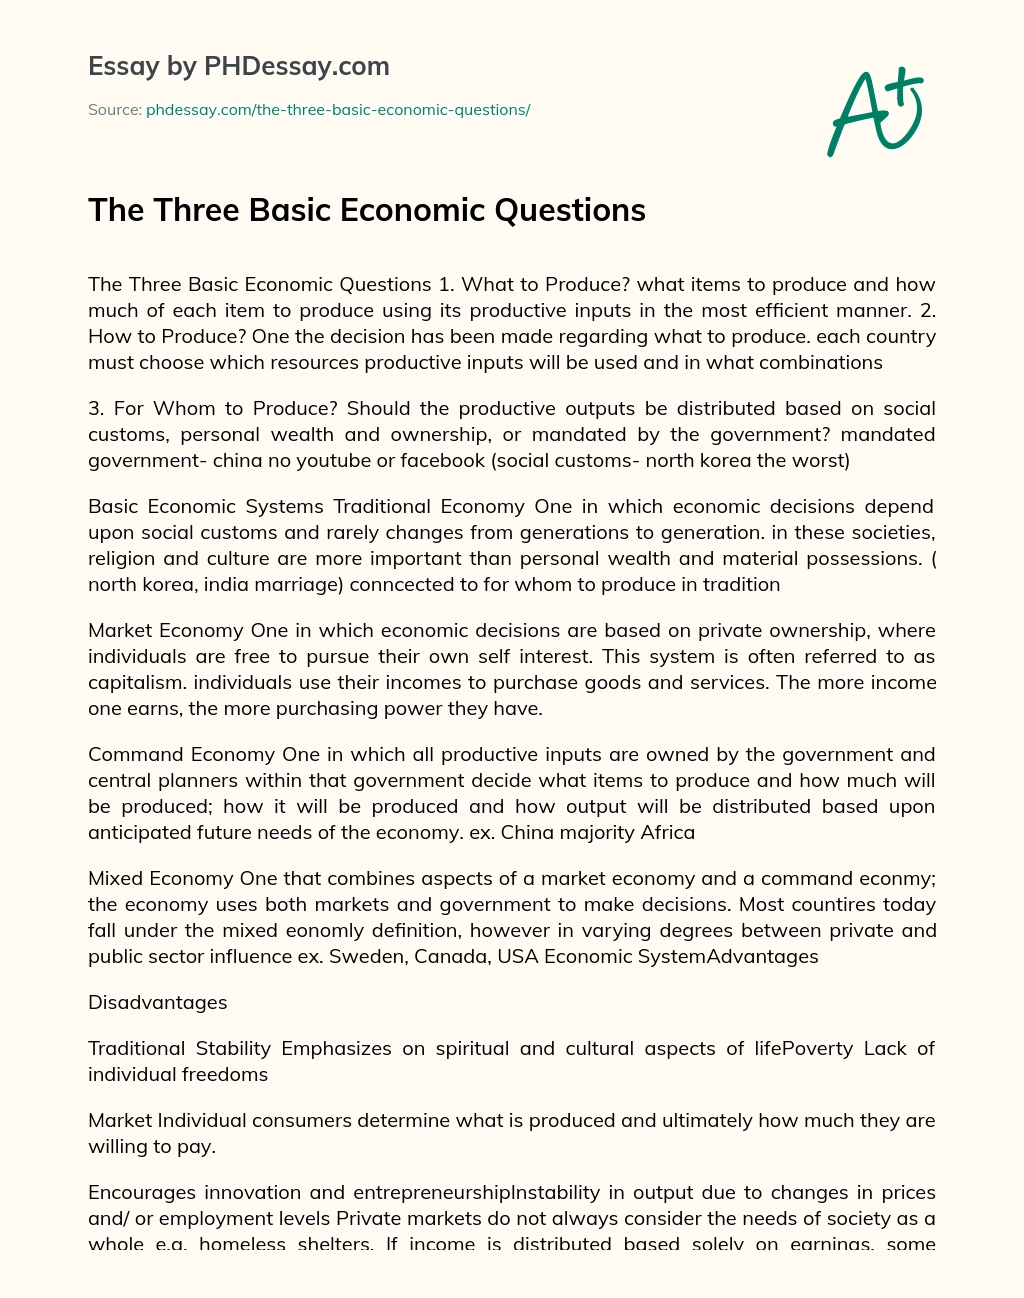 The Three Basic Economic Questions essay